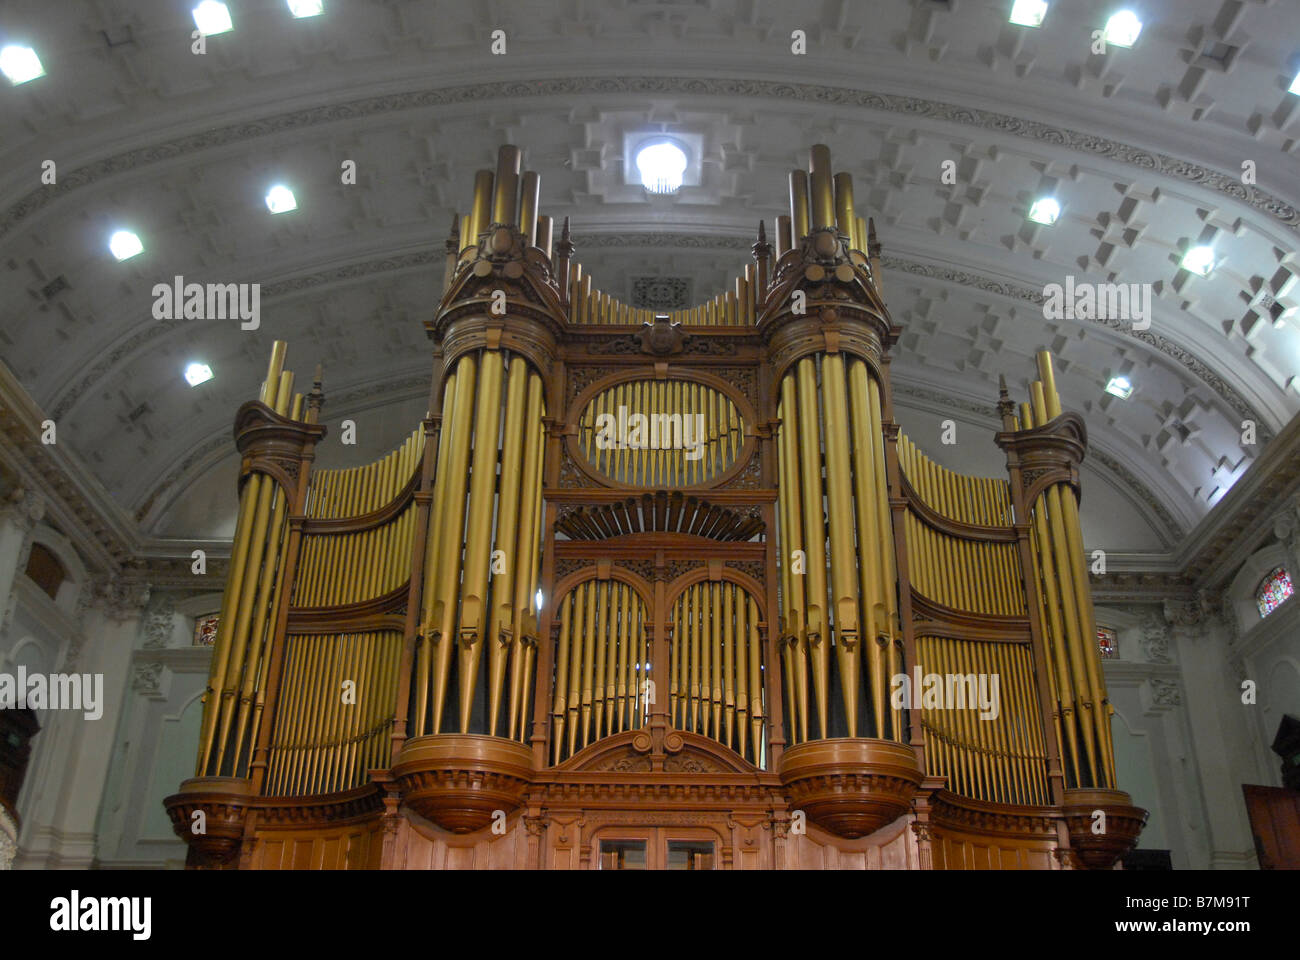 Huge pipe organ in the Town Hall of Pietermaritzburg, capital of Kwazulu Natal, South Africa Stock Photo